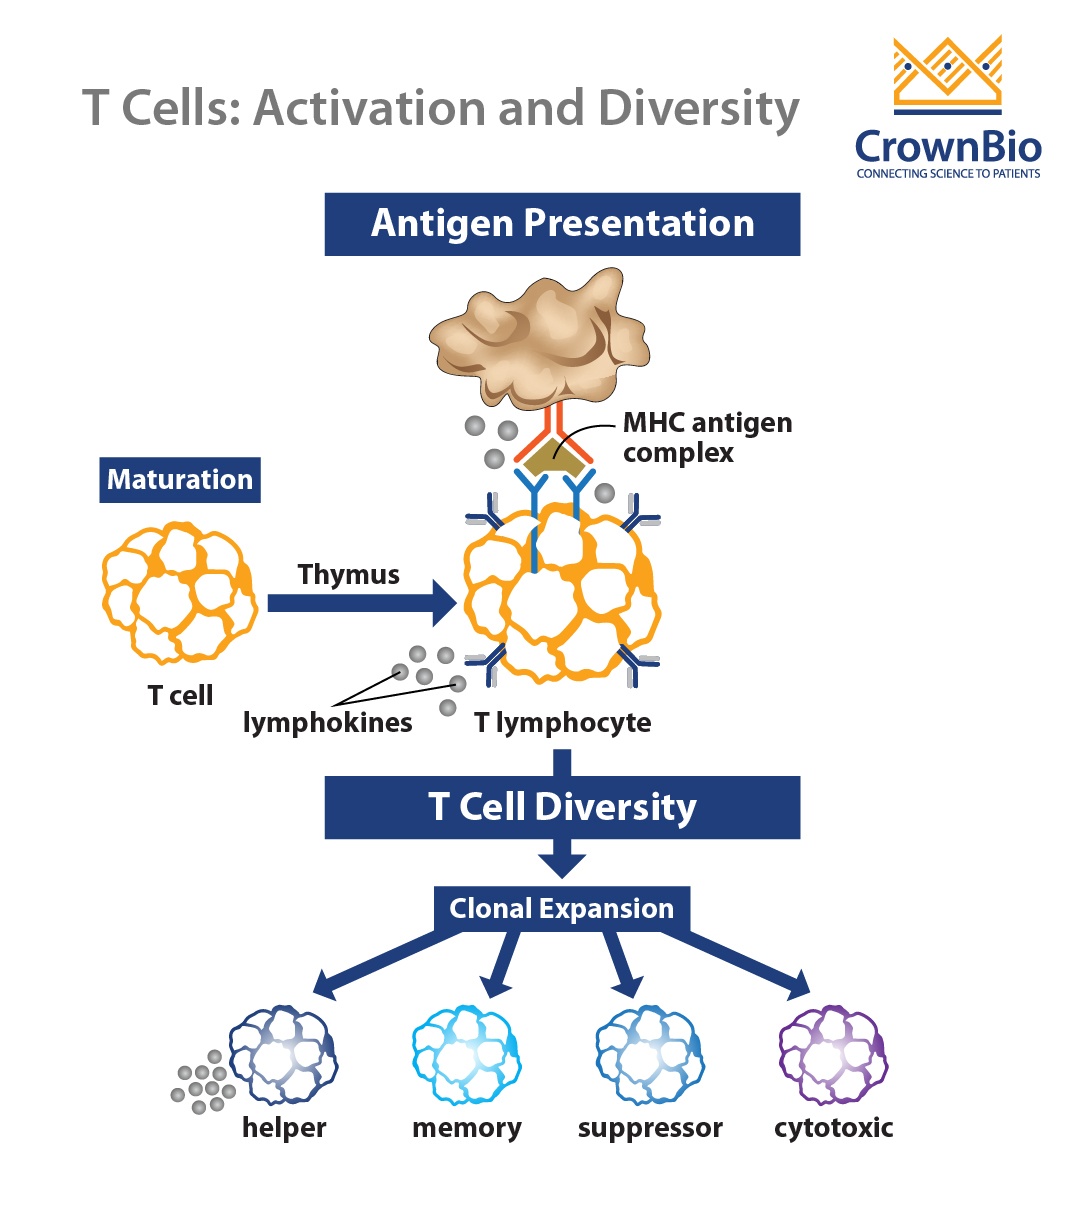 t cell activation, diversity, helper, memory, suppressor, cytotoxic, MHC antigen complex, antigen presentation